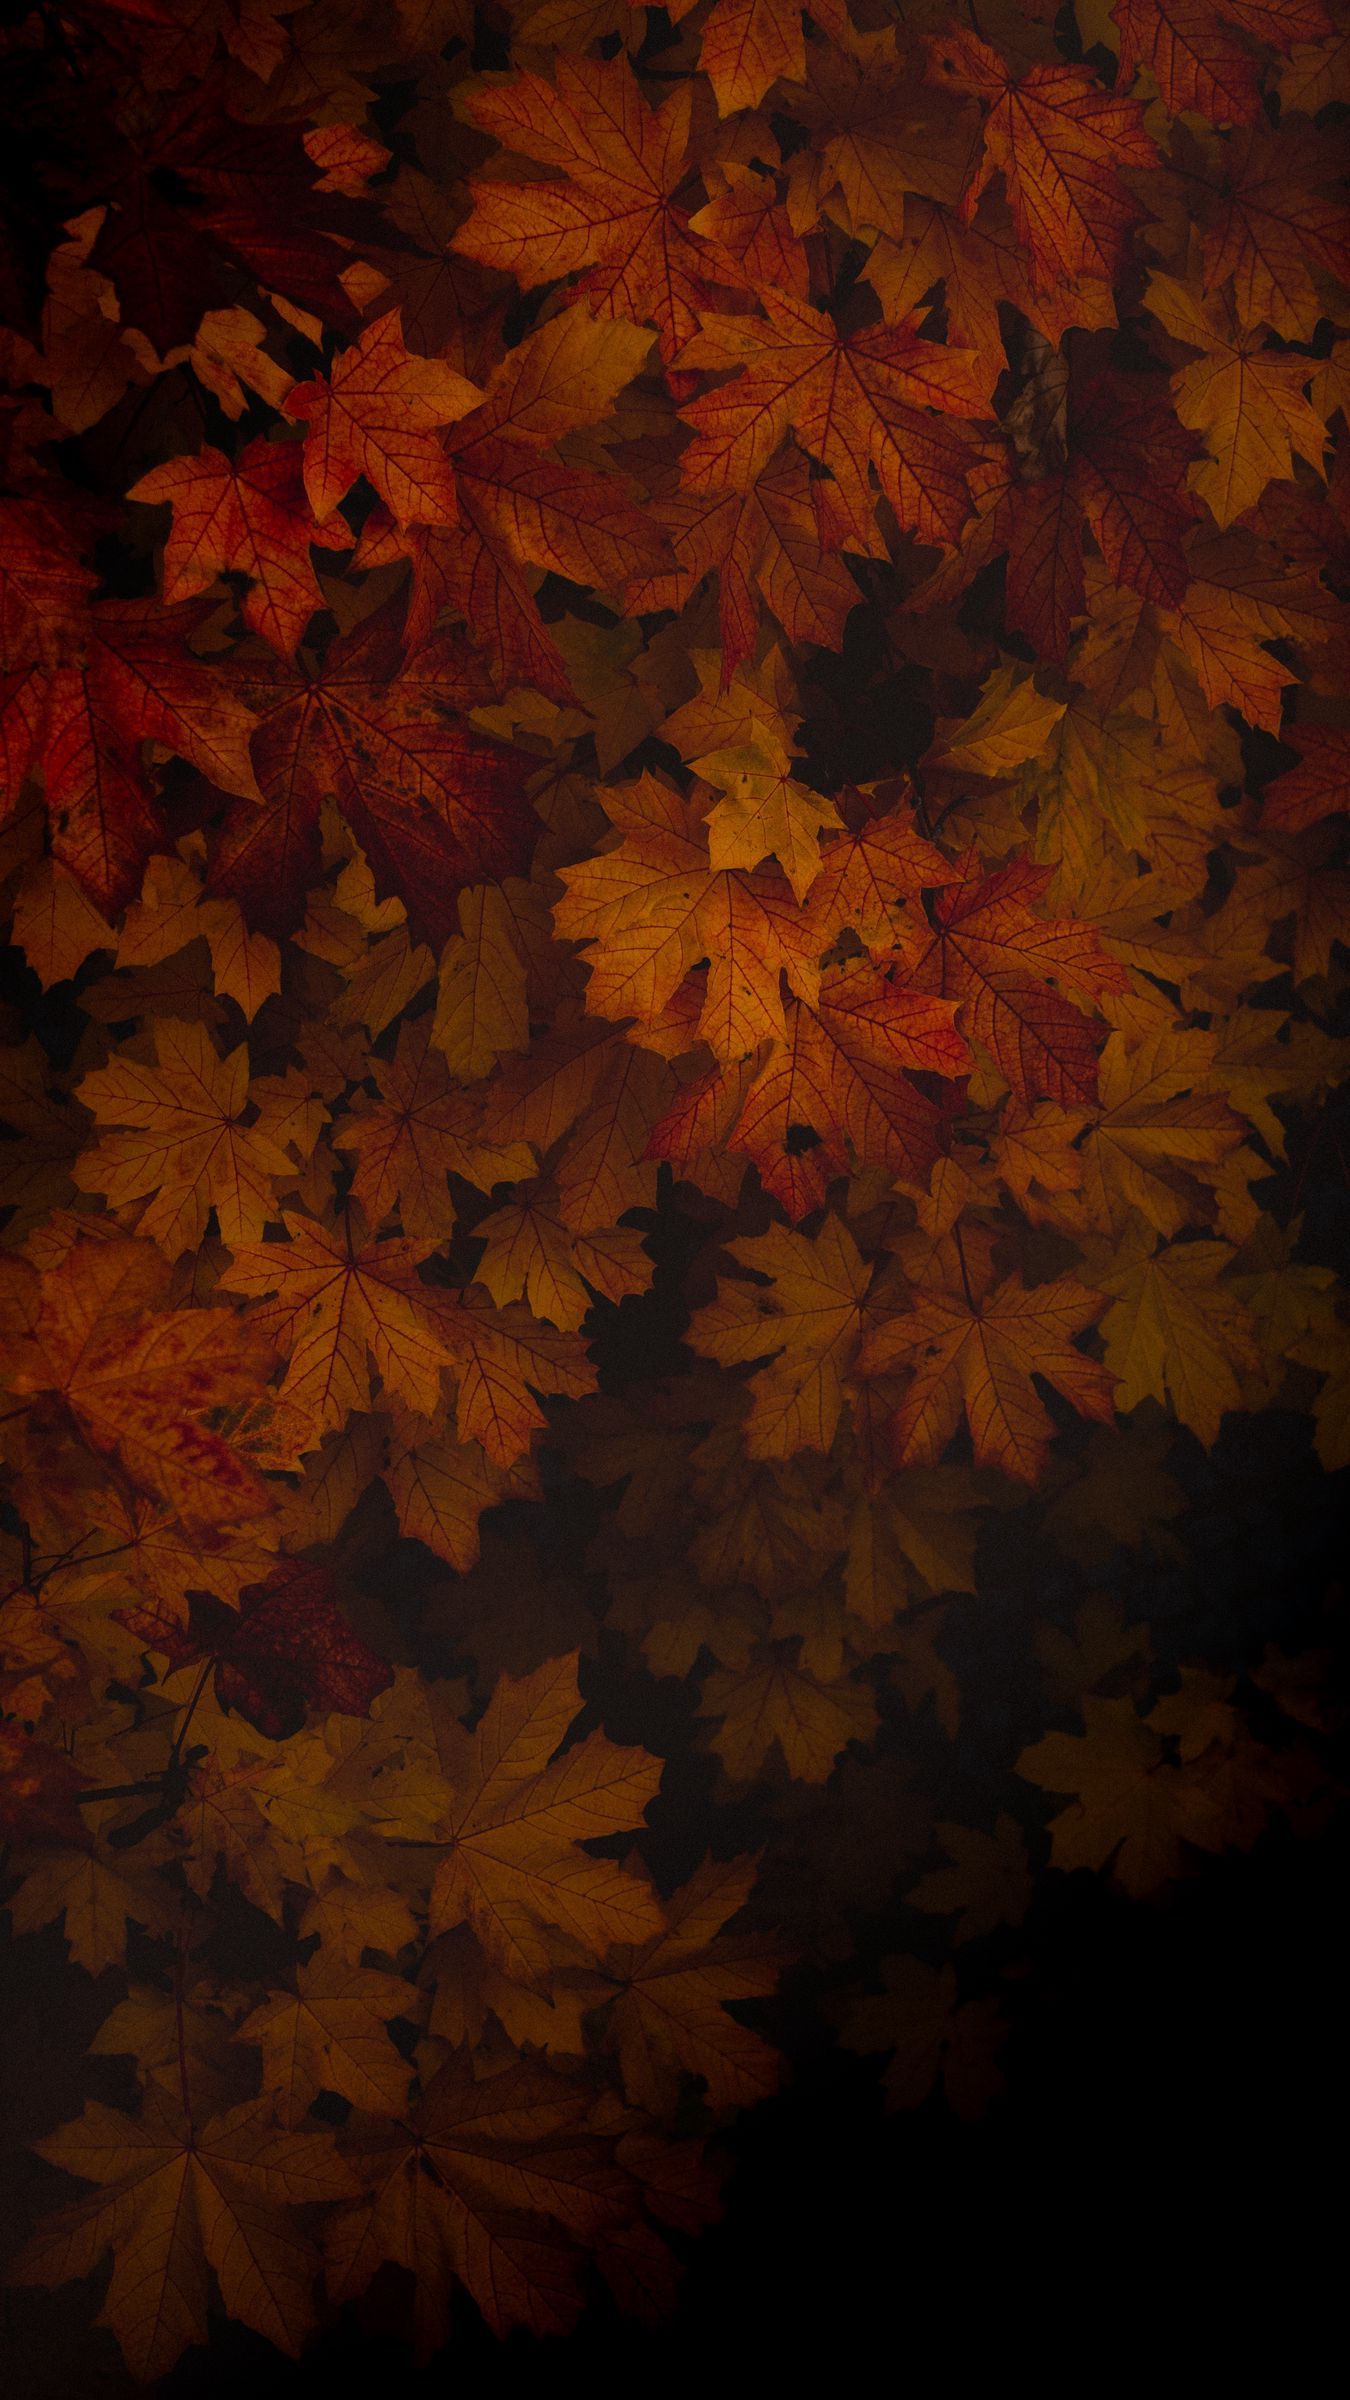 Autumn Wallpaper Photos Download The BEST Free Autumn Wallpaper Stock  Photos  HD Images